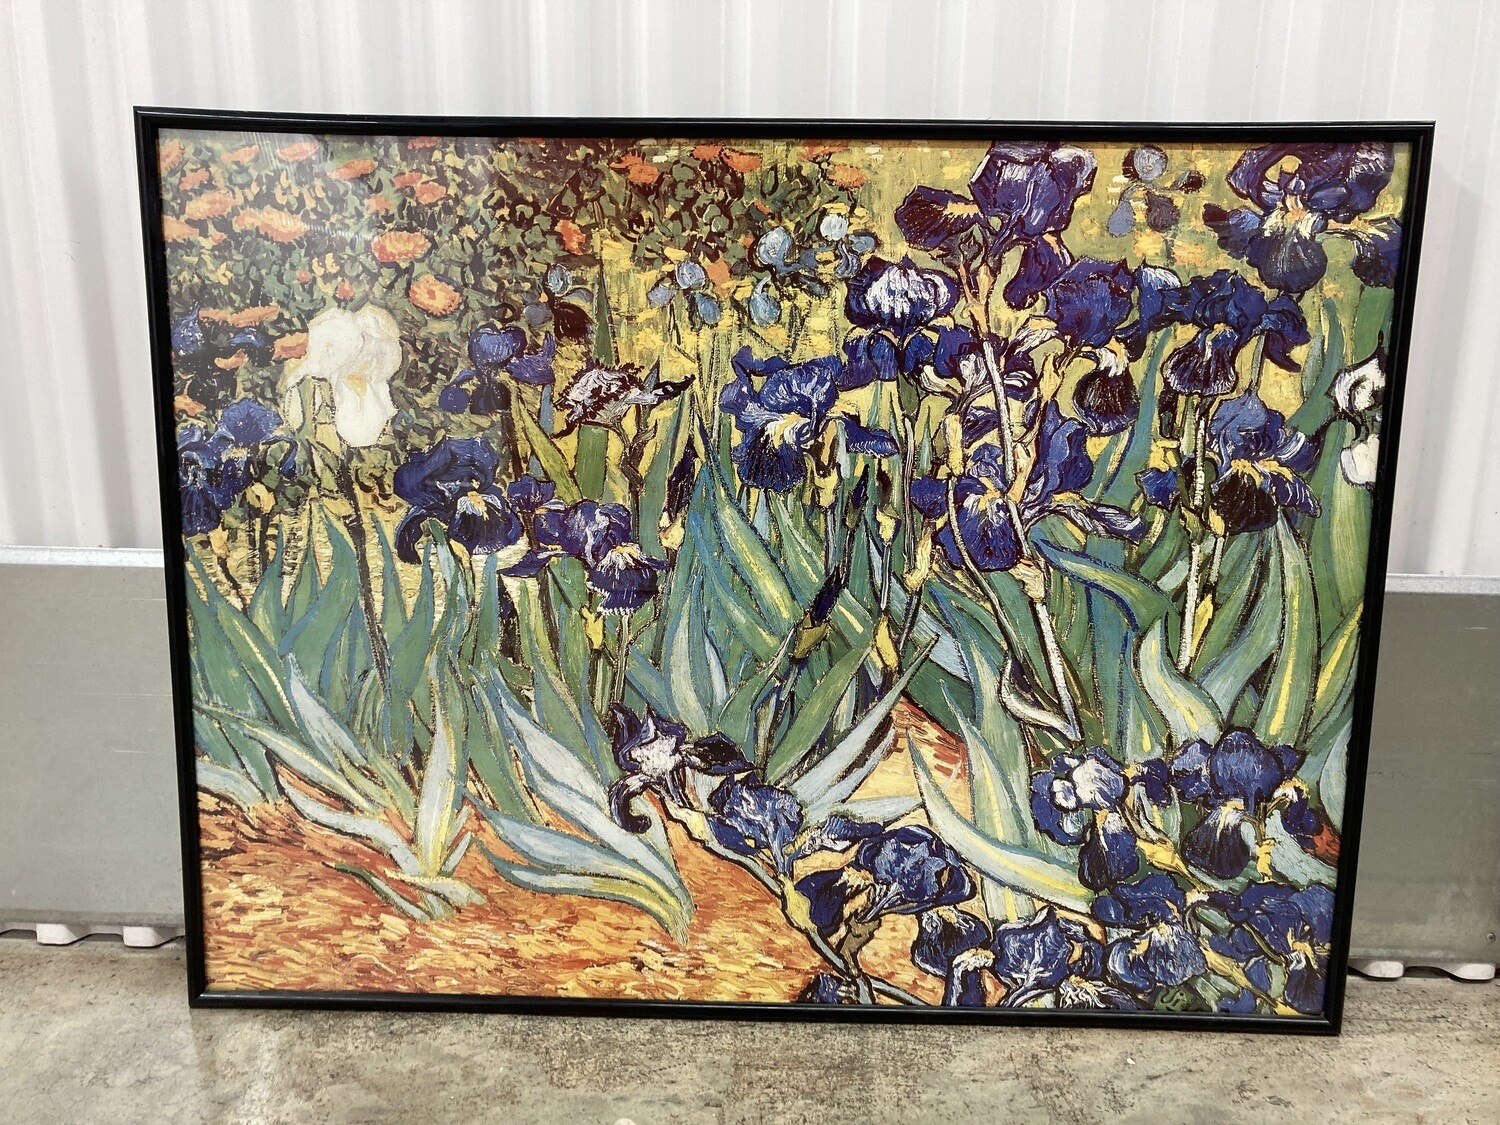 Framed Print: Van Gogh "Irises" #2314 - 4 mos. to sell @ 50% off